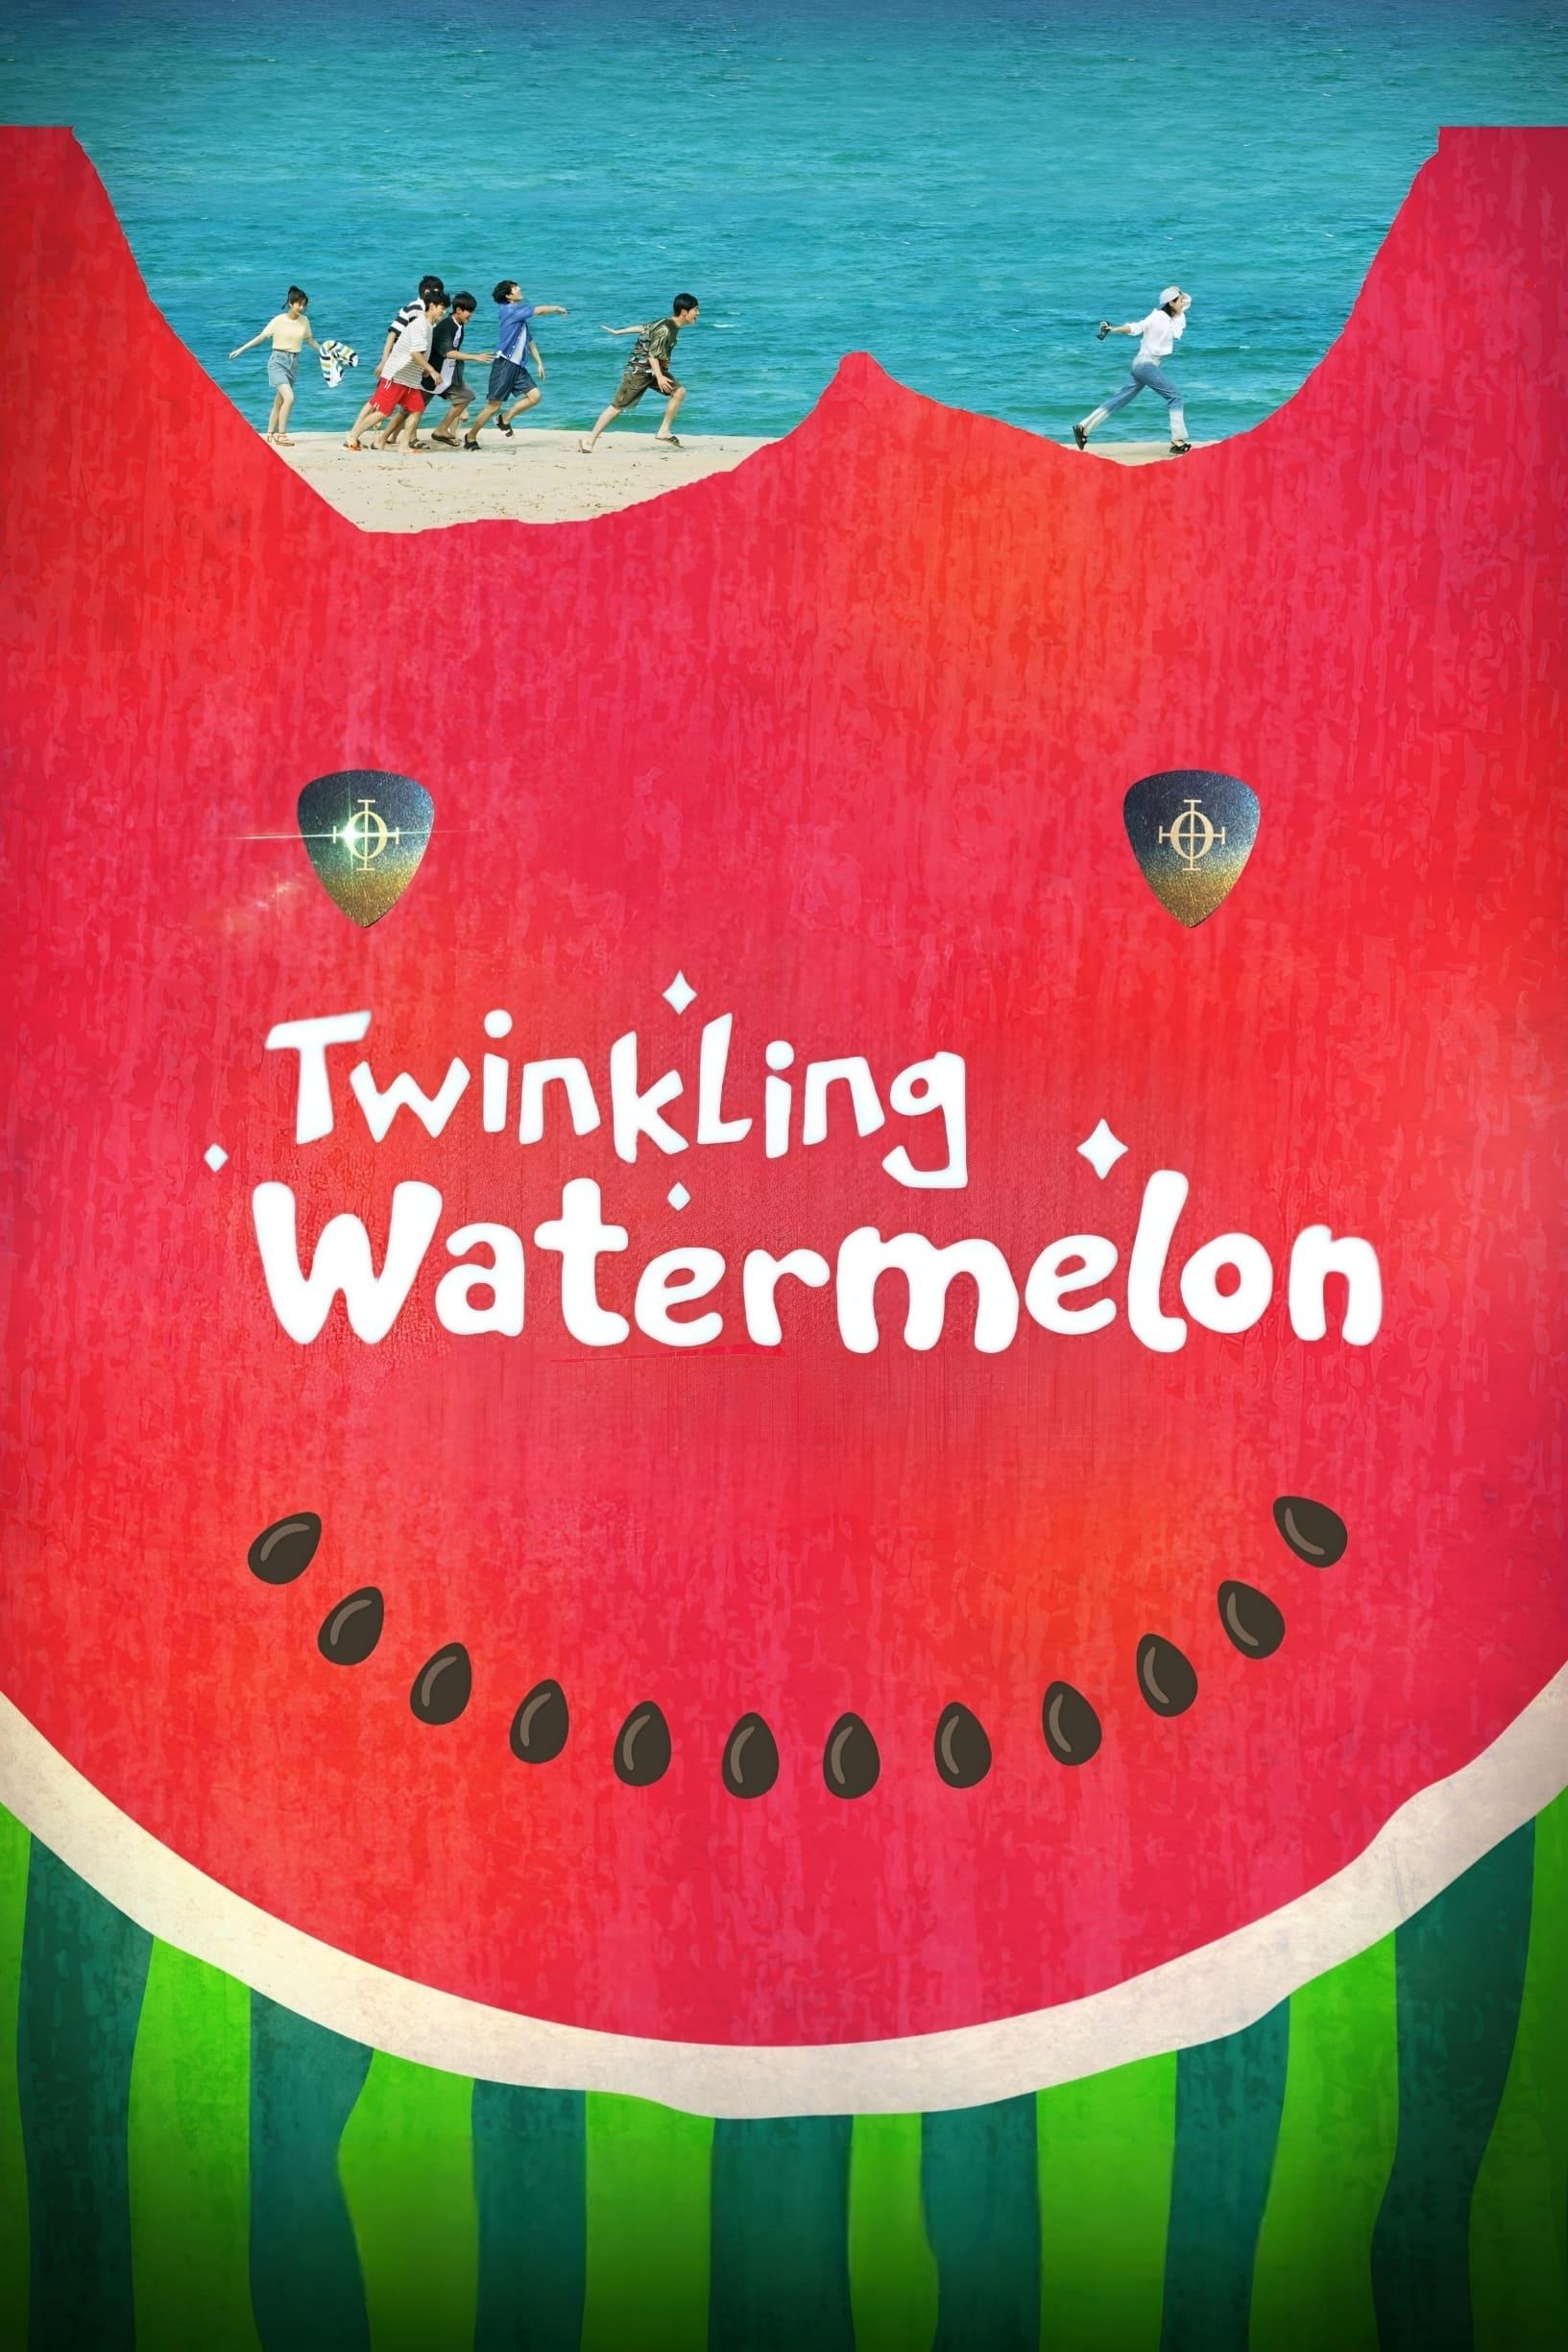 Twinkling Watermelon poster